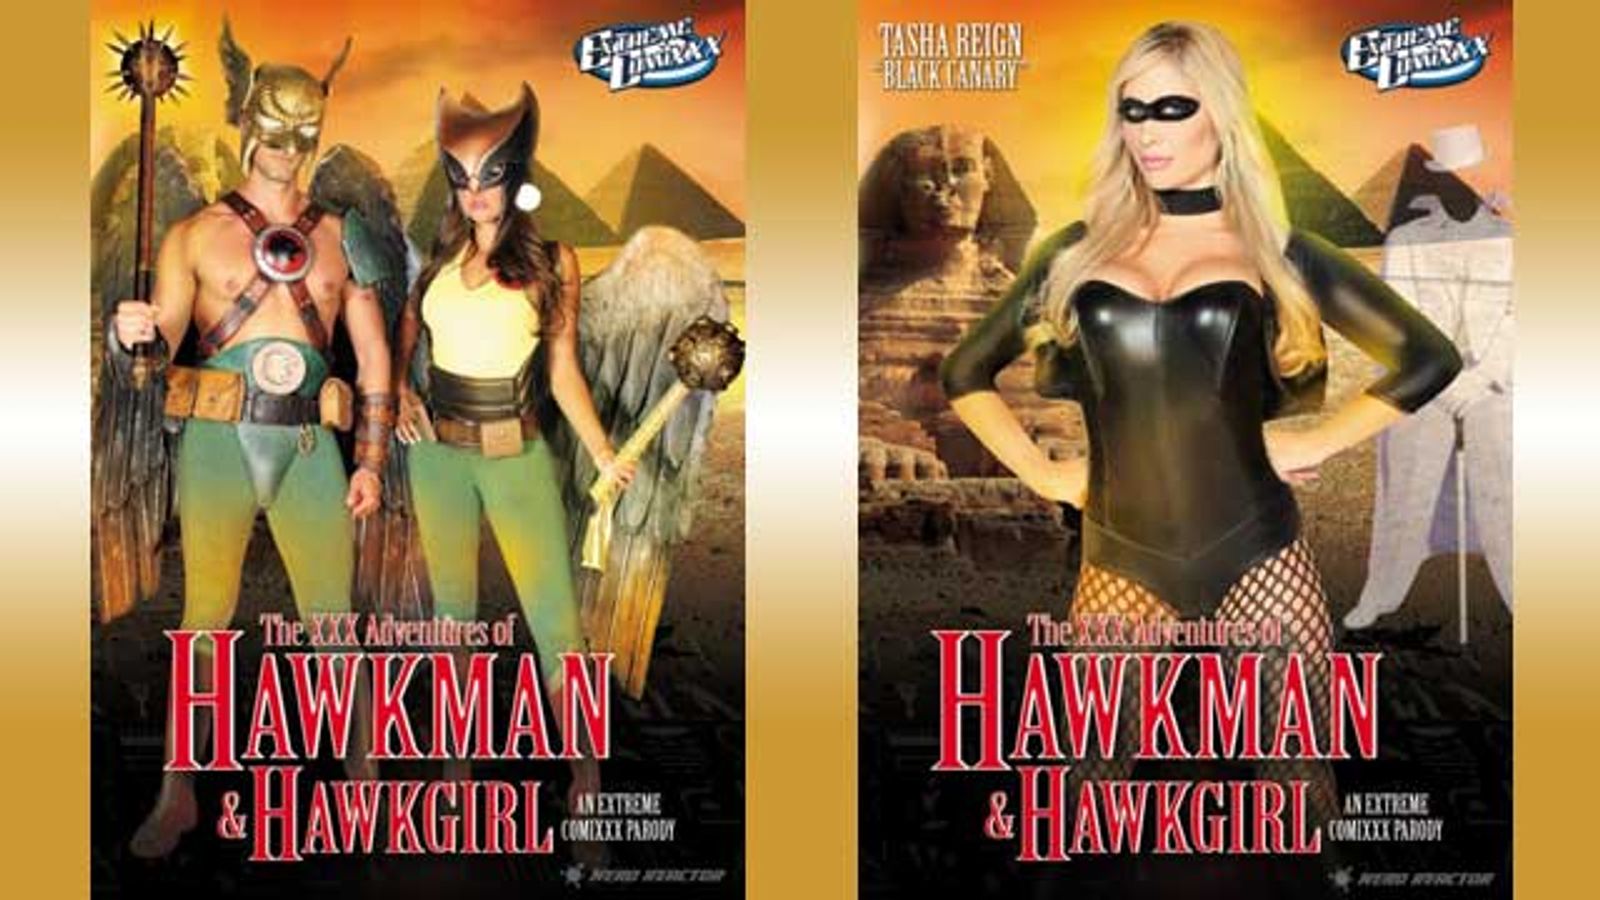 ‘XXX Adventures of Hawkman & Hawkgirl’ Hardcore Trailer Debuts